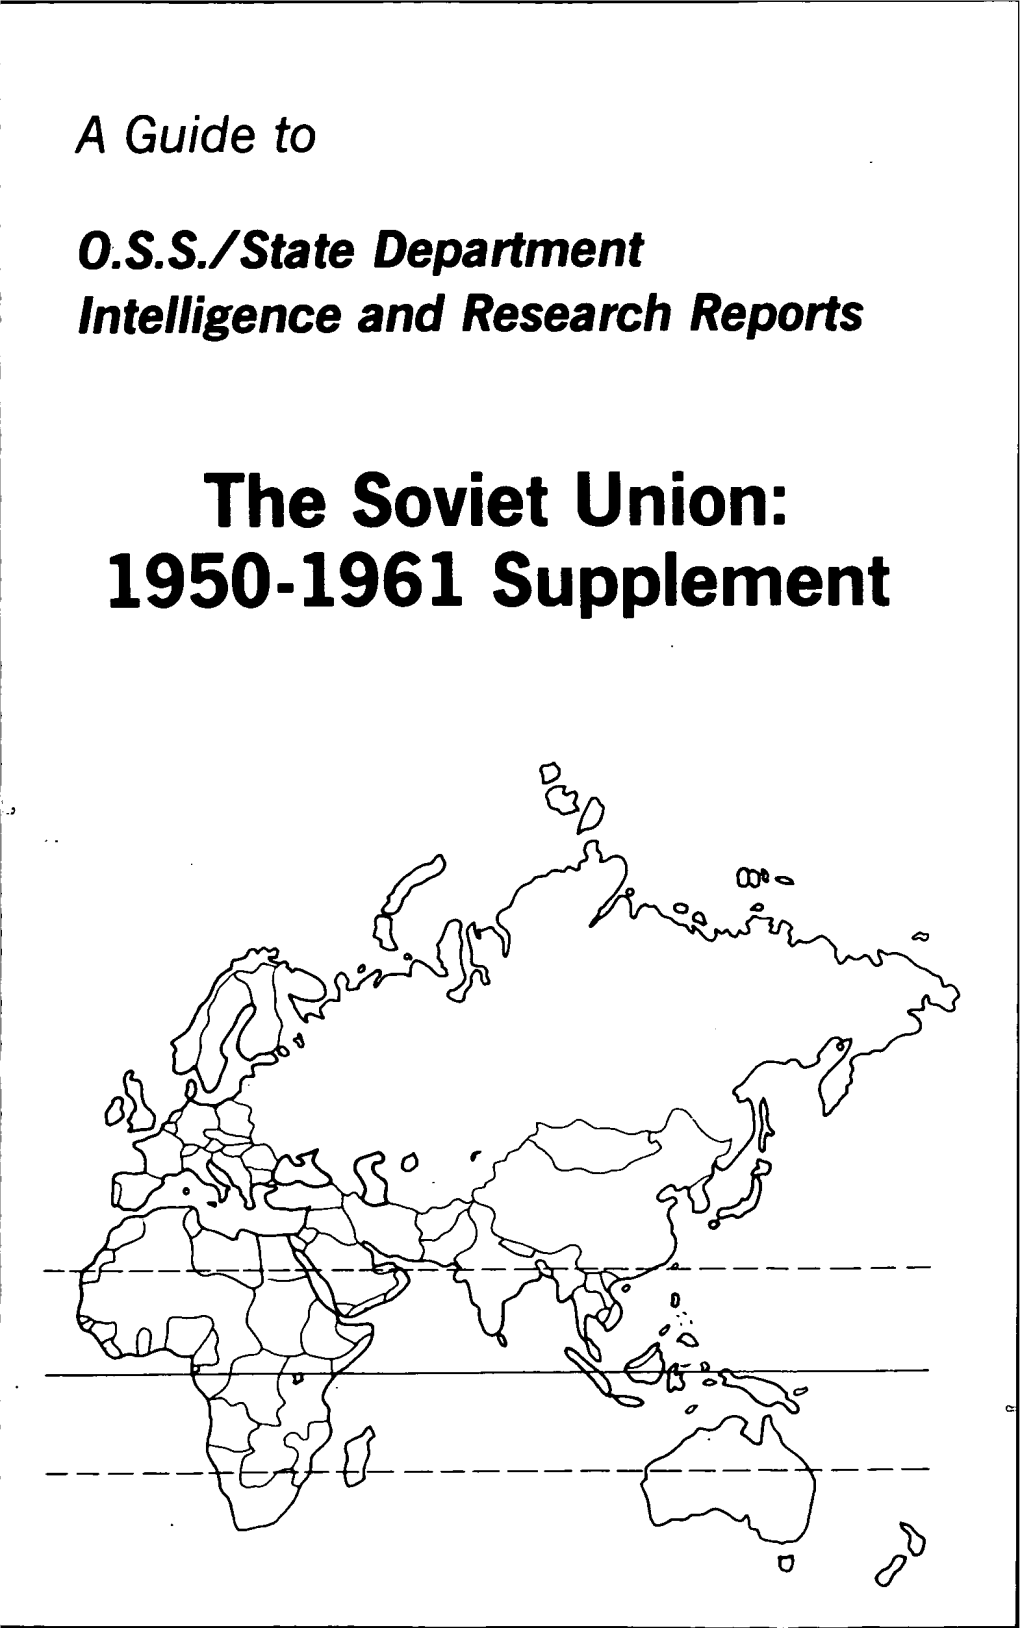 The Soviet Union: 1950-1961 Supplement